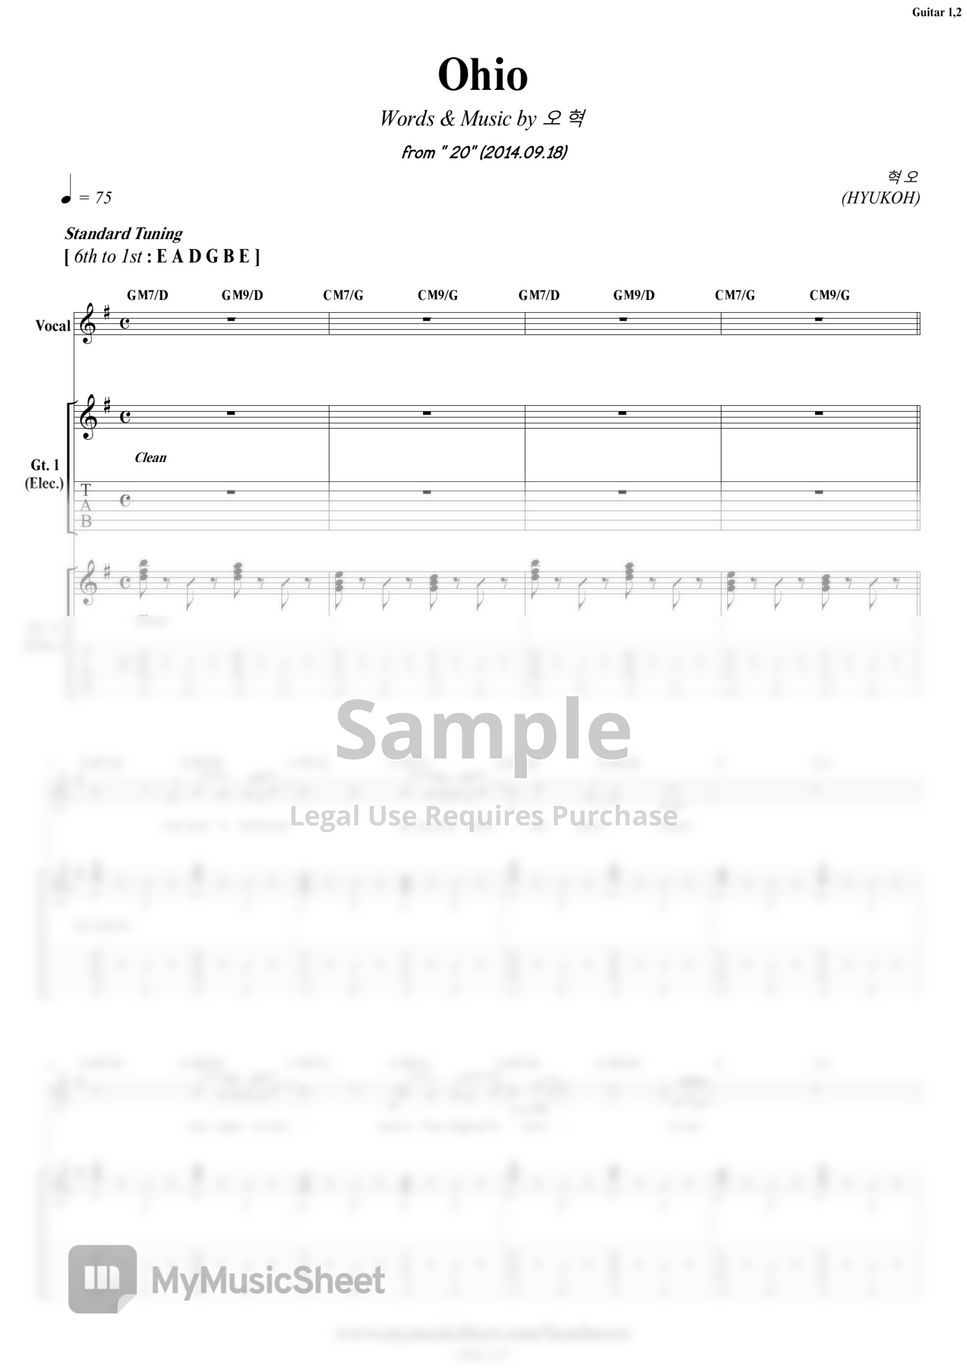 Letra Jingle Bells, PDF, Vocal Music